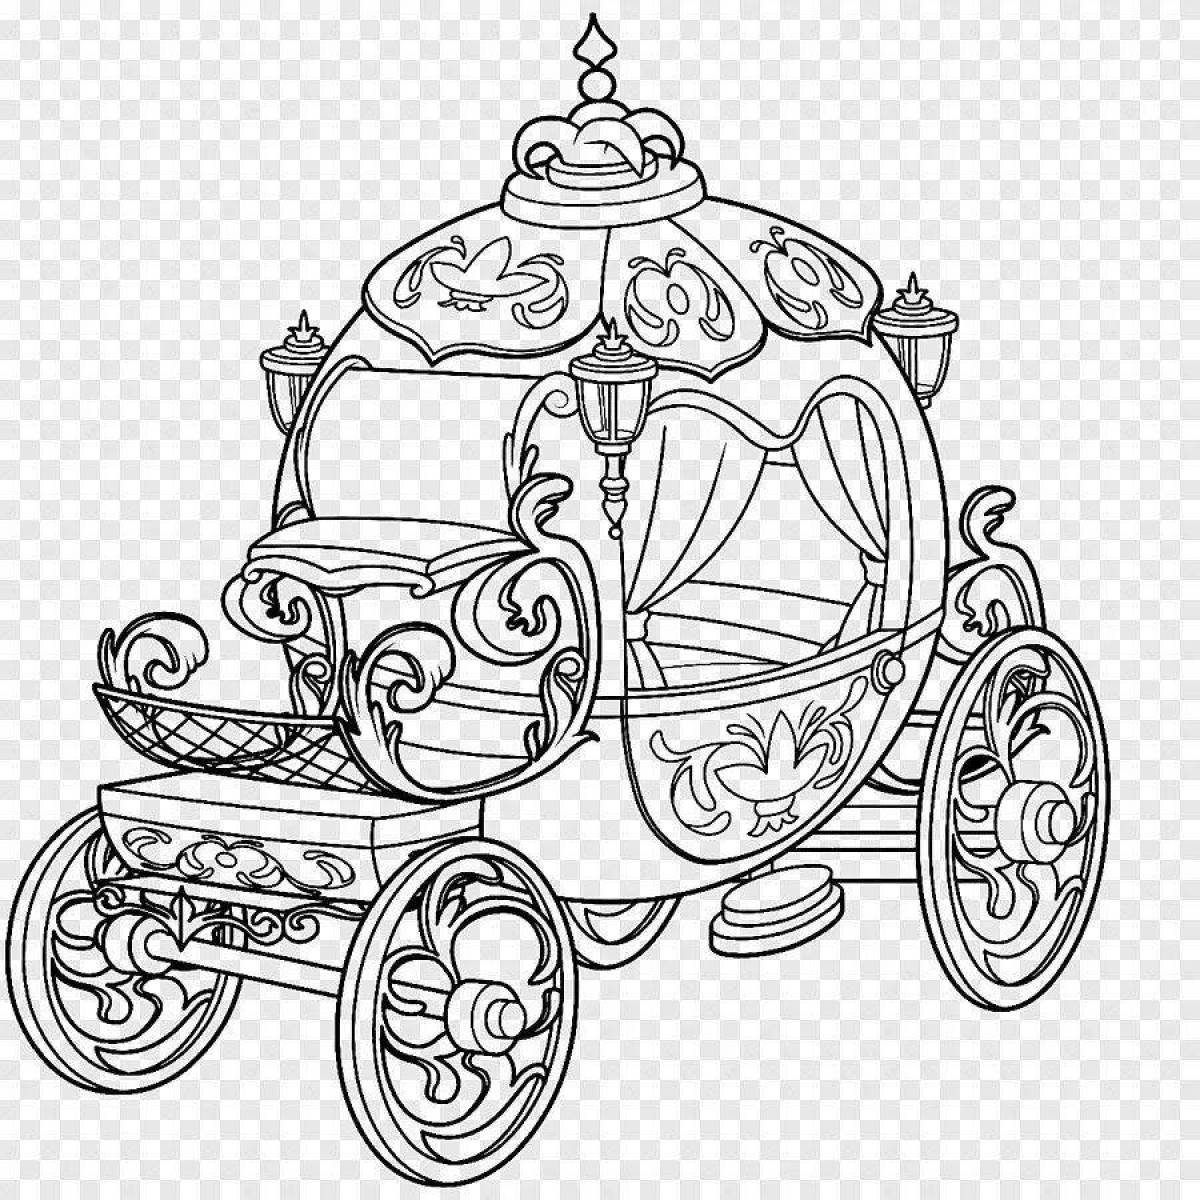 Cinderella's grand carriage coloring book